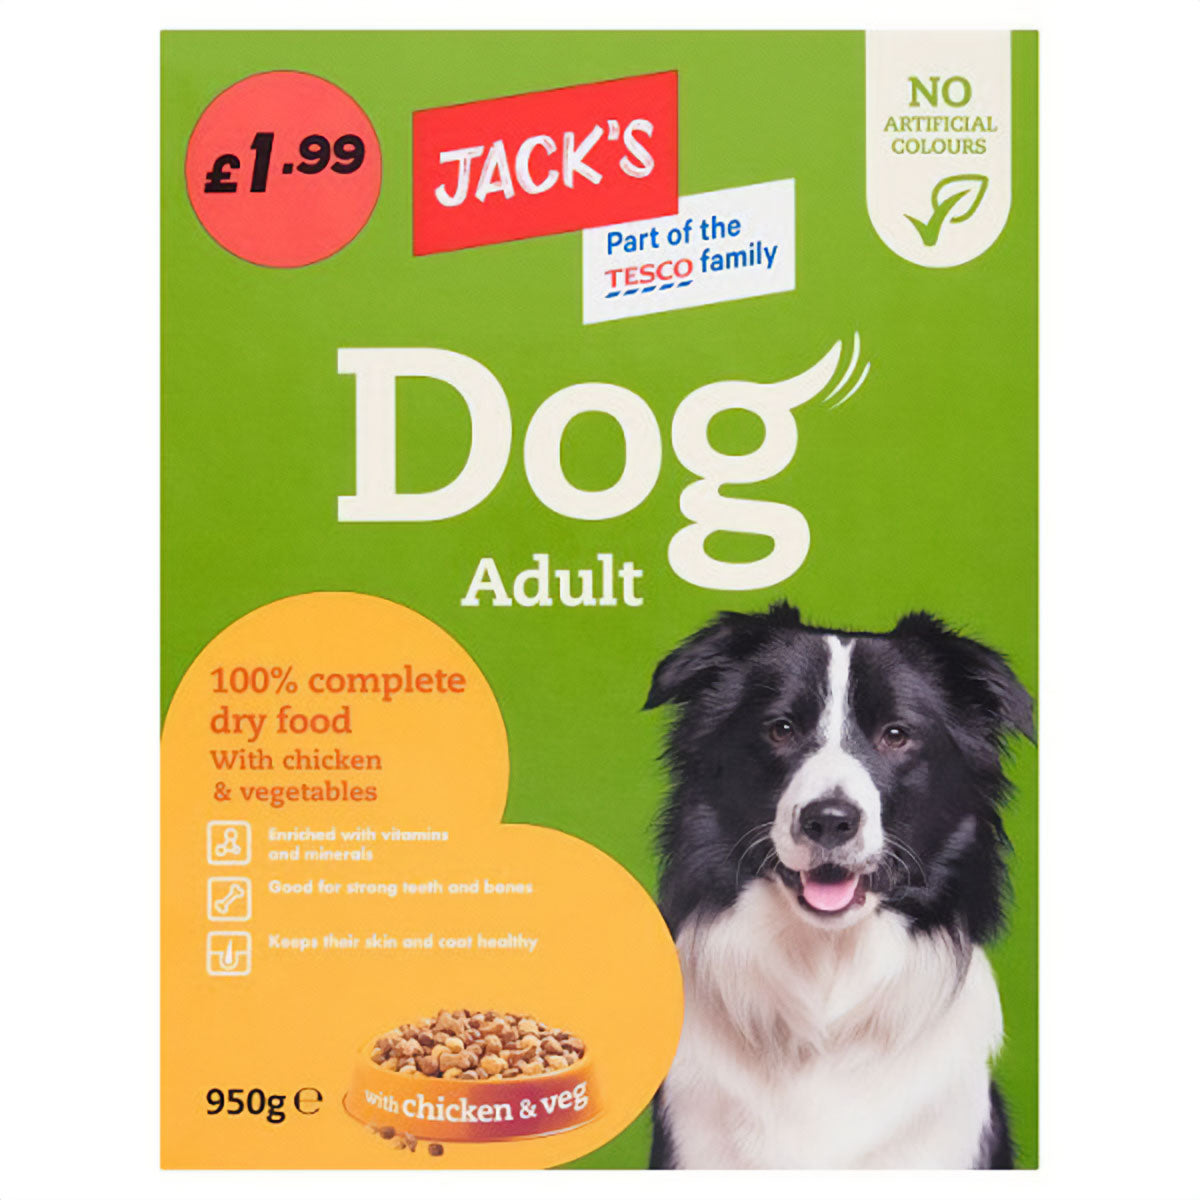 Jacks - 100% Complete Dry Food With Chicken & Vegetables Adult Dog Food - 950g